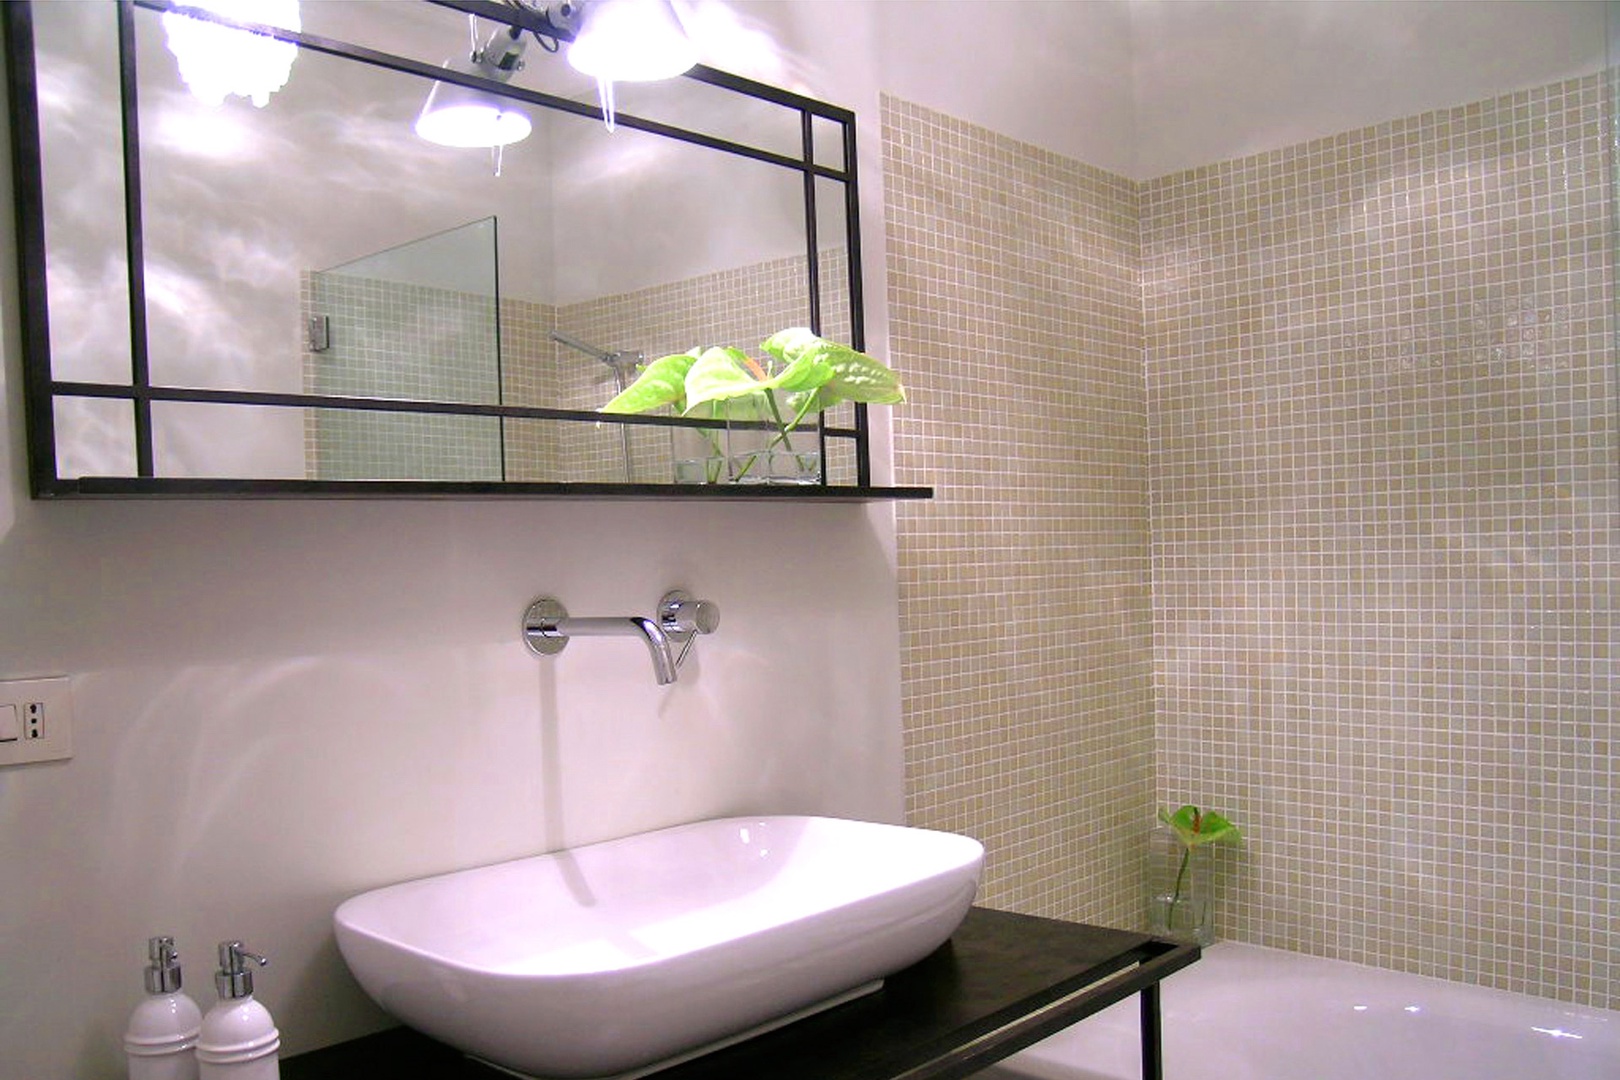 Pale sage colored tiles line the large bathtub walls of the en suite bathroom of bedroom 1.